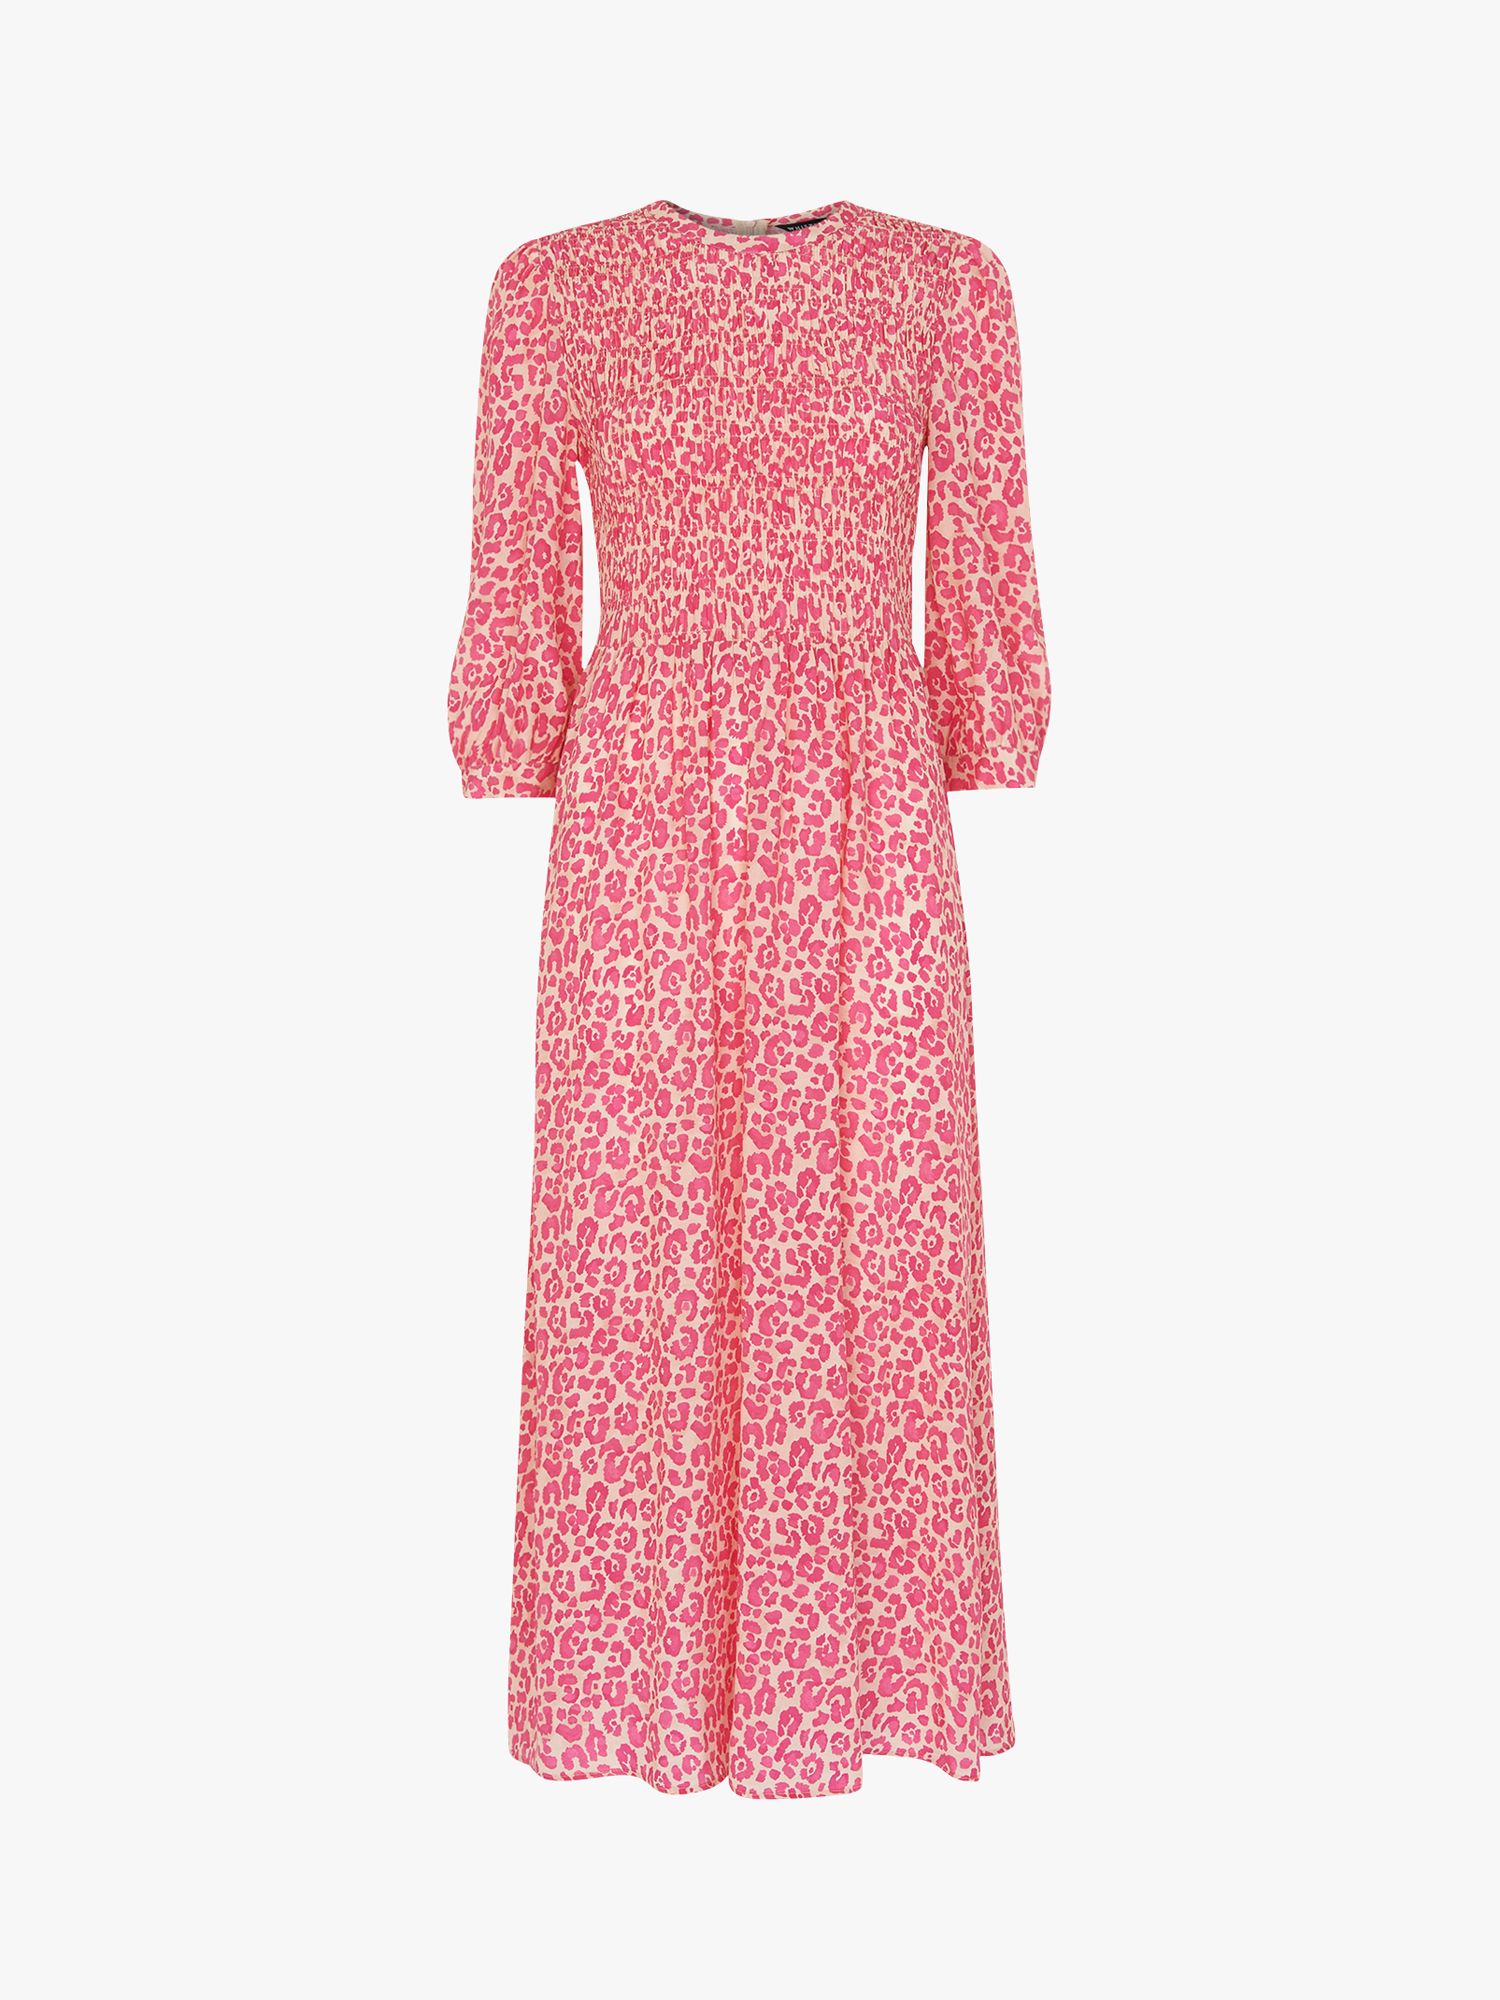 Whistles Cheetah Print Shirred Midi Dress, Pink/Multi, 12